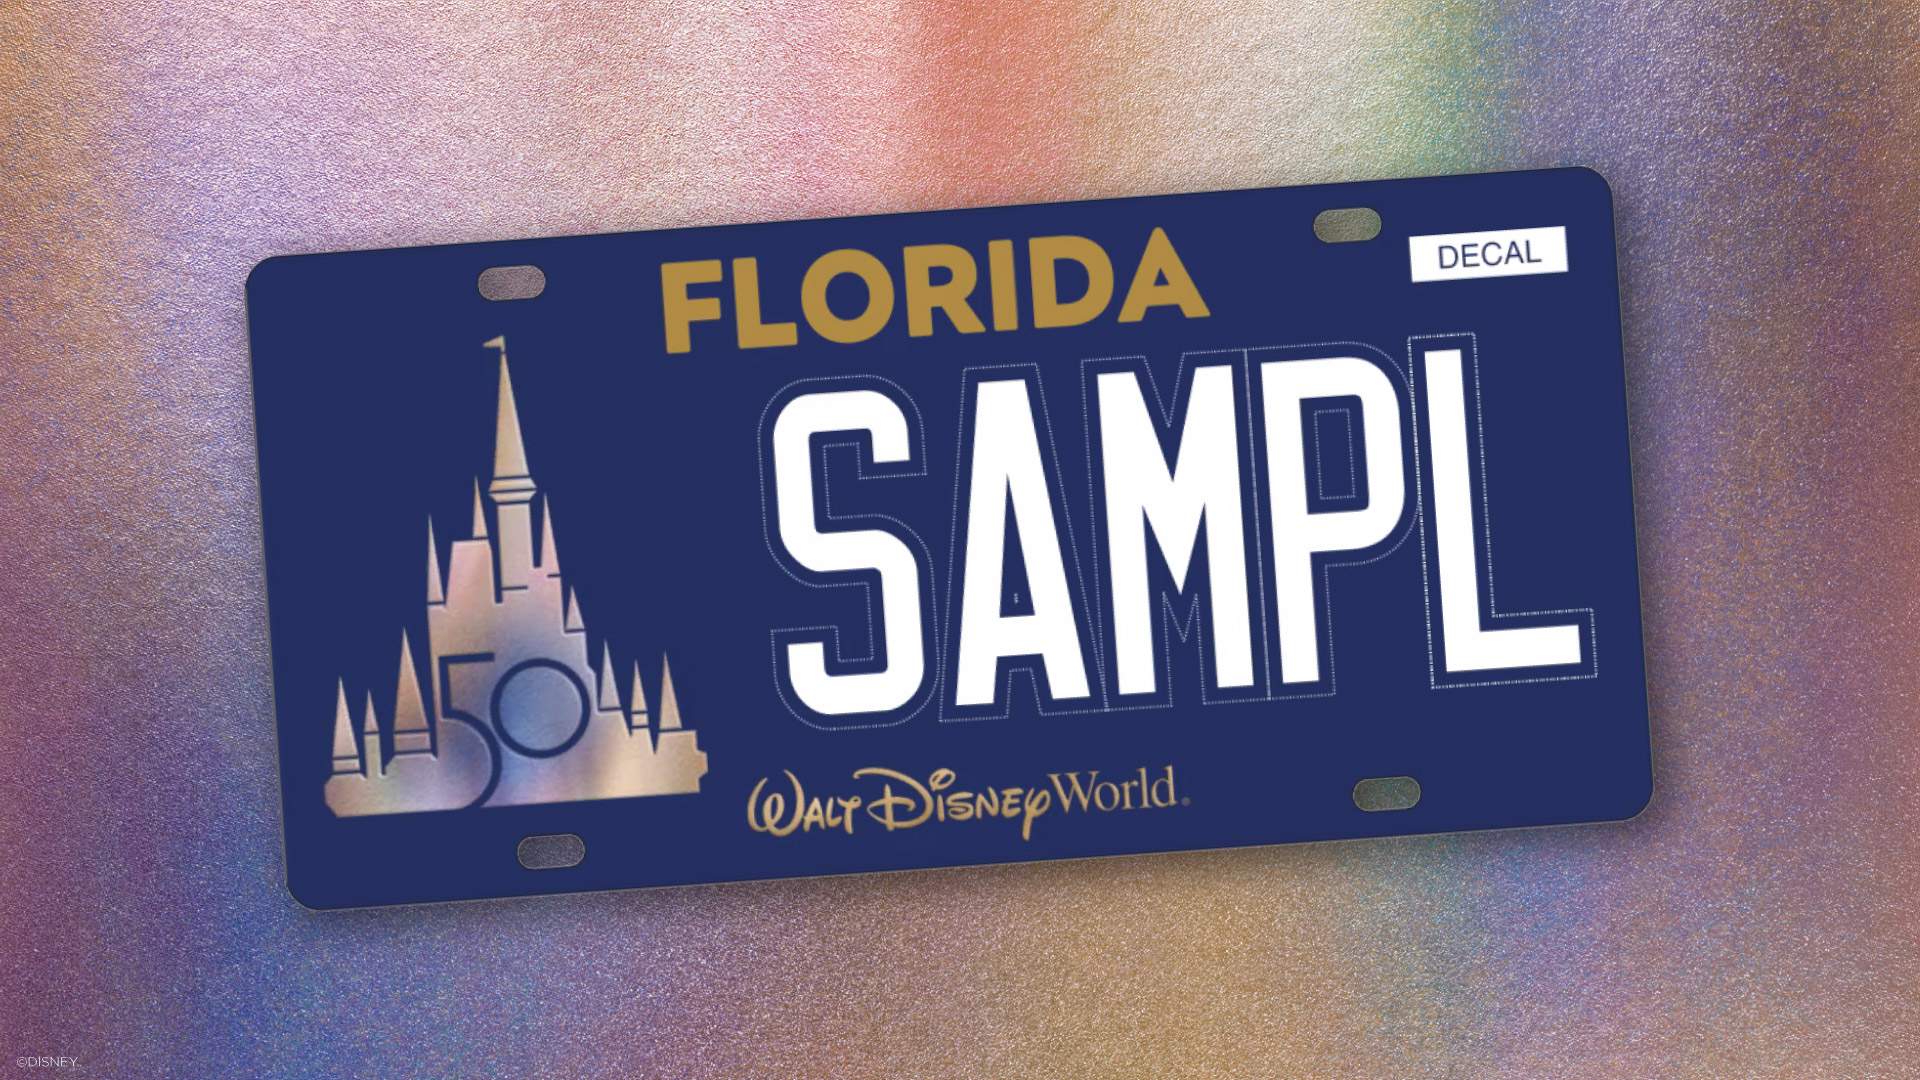 Oh Boy! Florida to get first-ever Walt Disney World license plate